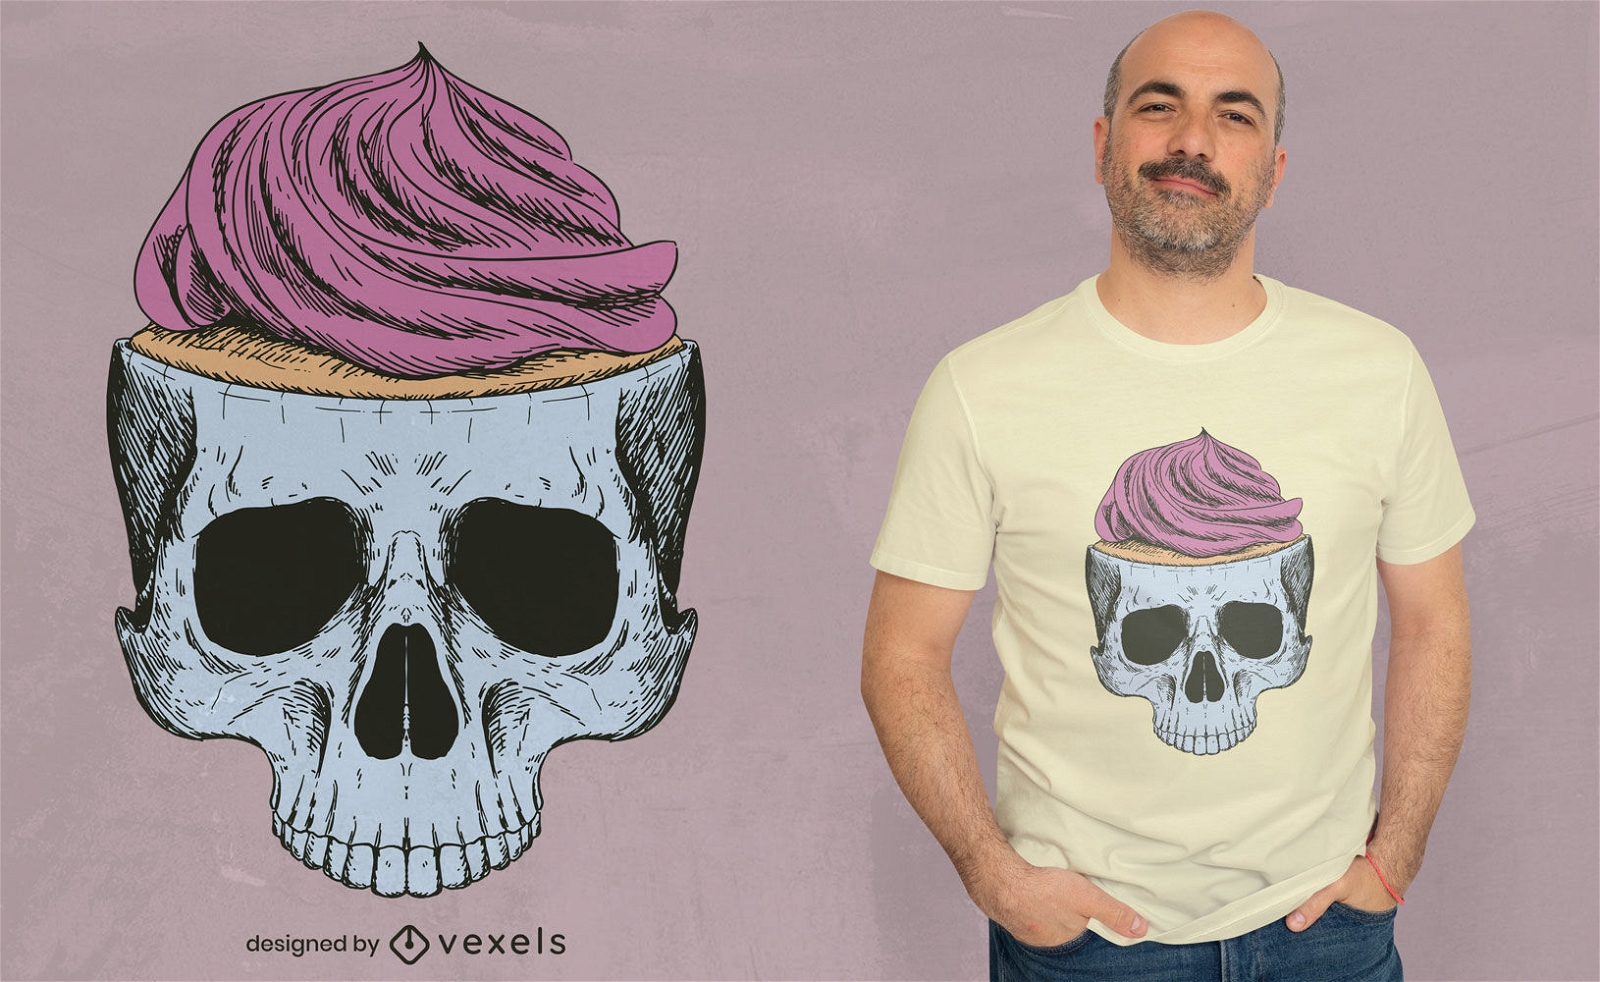 Cupcake skull t-shirt design